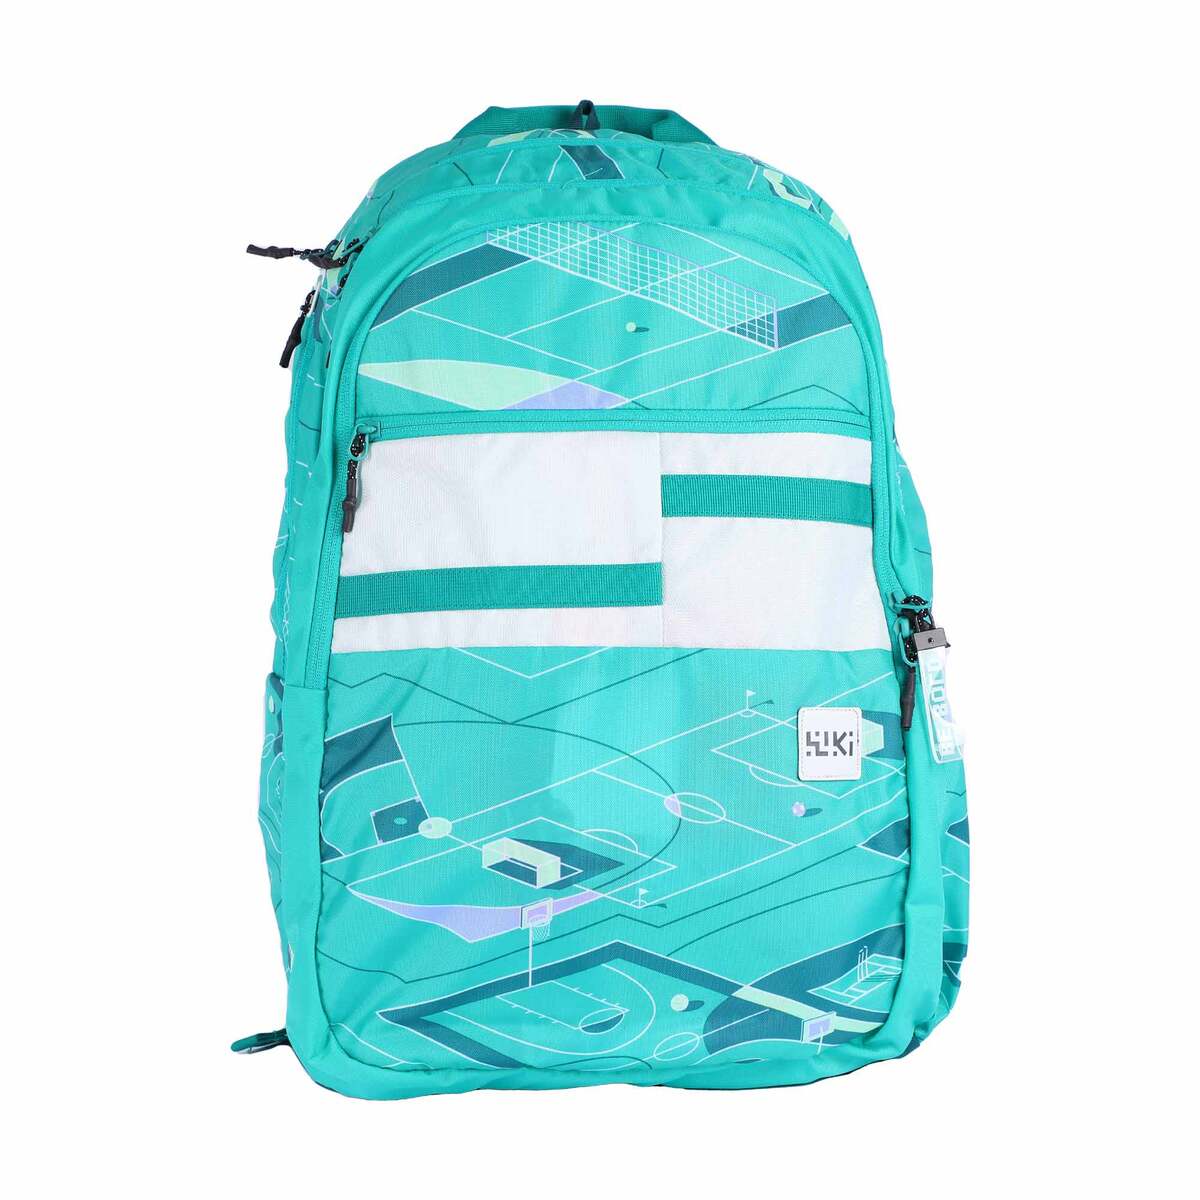 Wildcraft School Backpack PlyOff4 19.5inch, Green